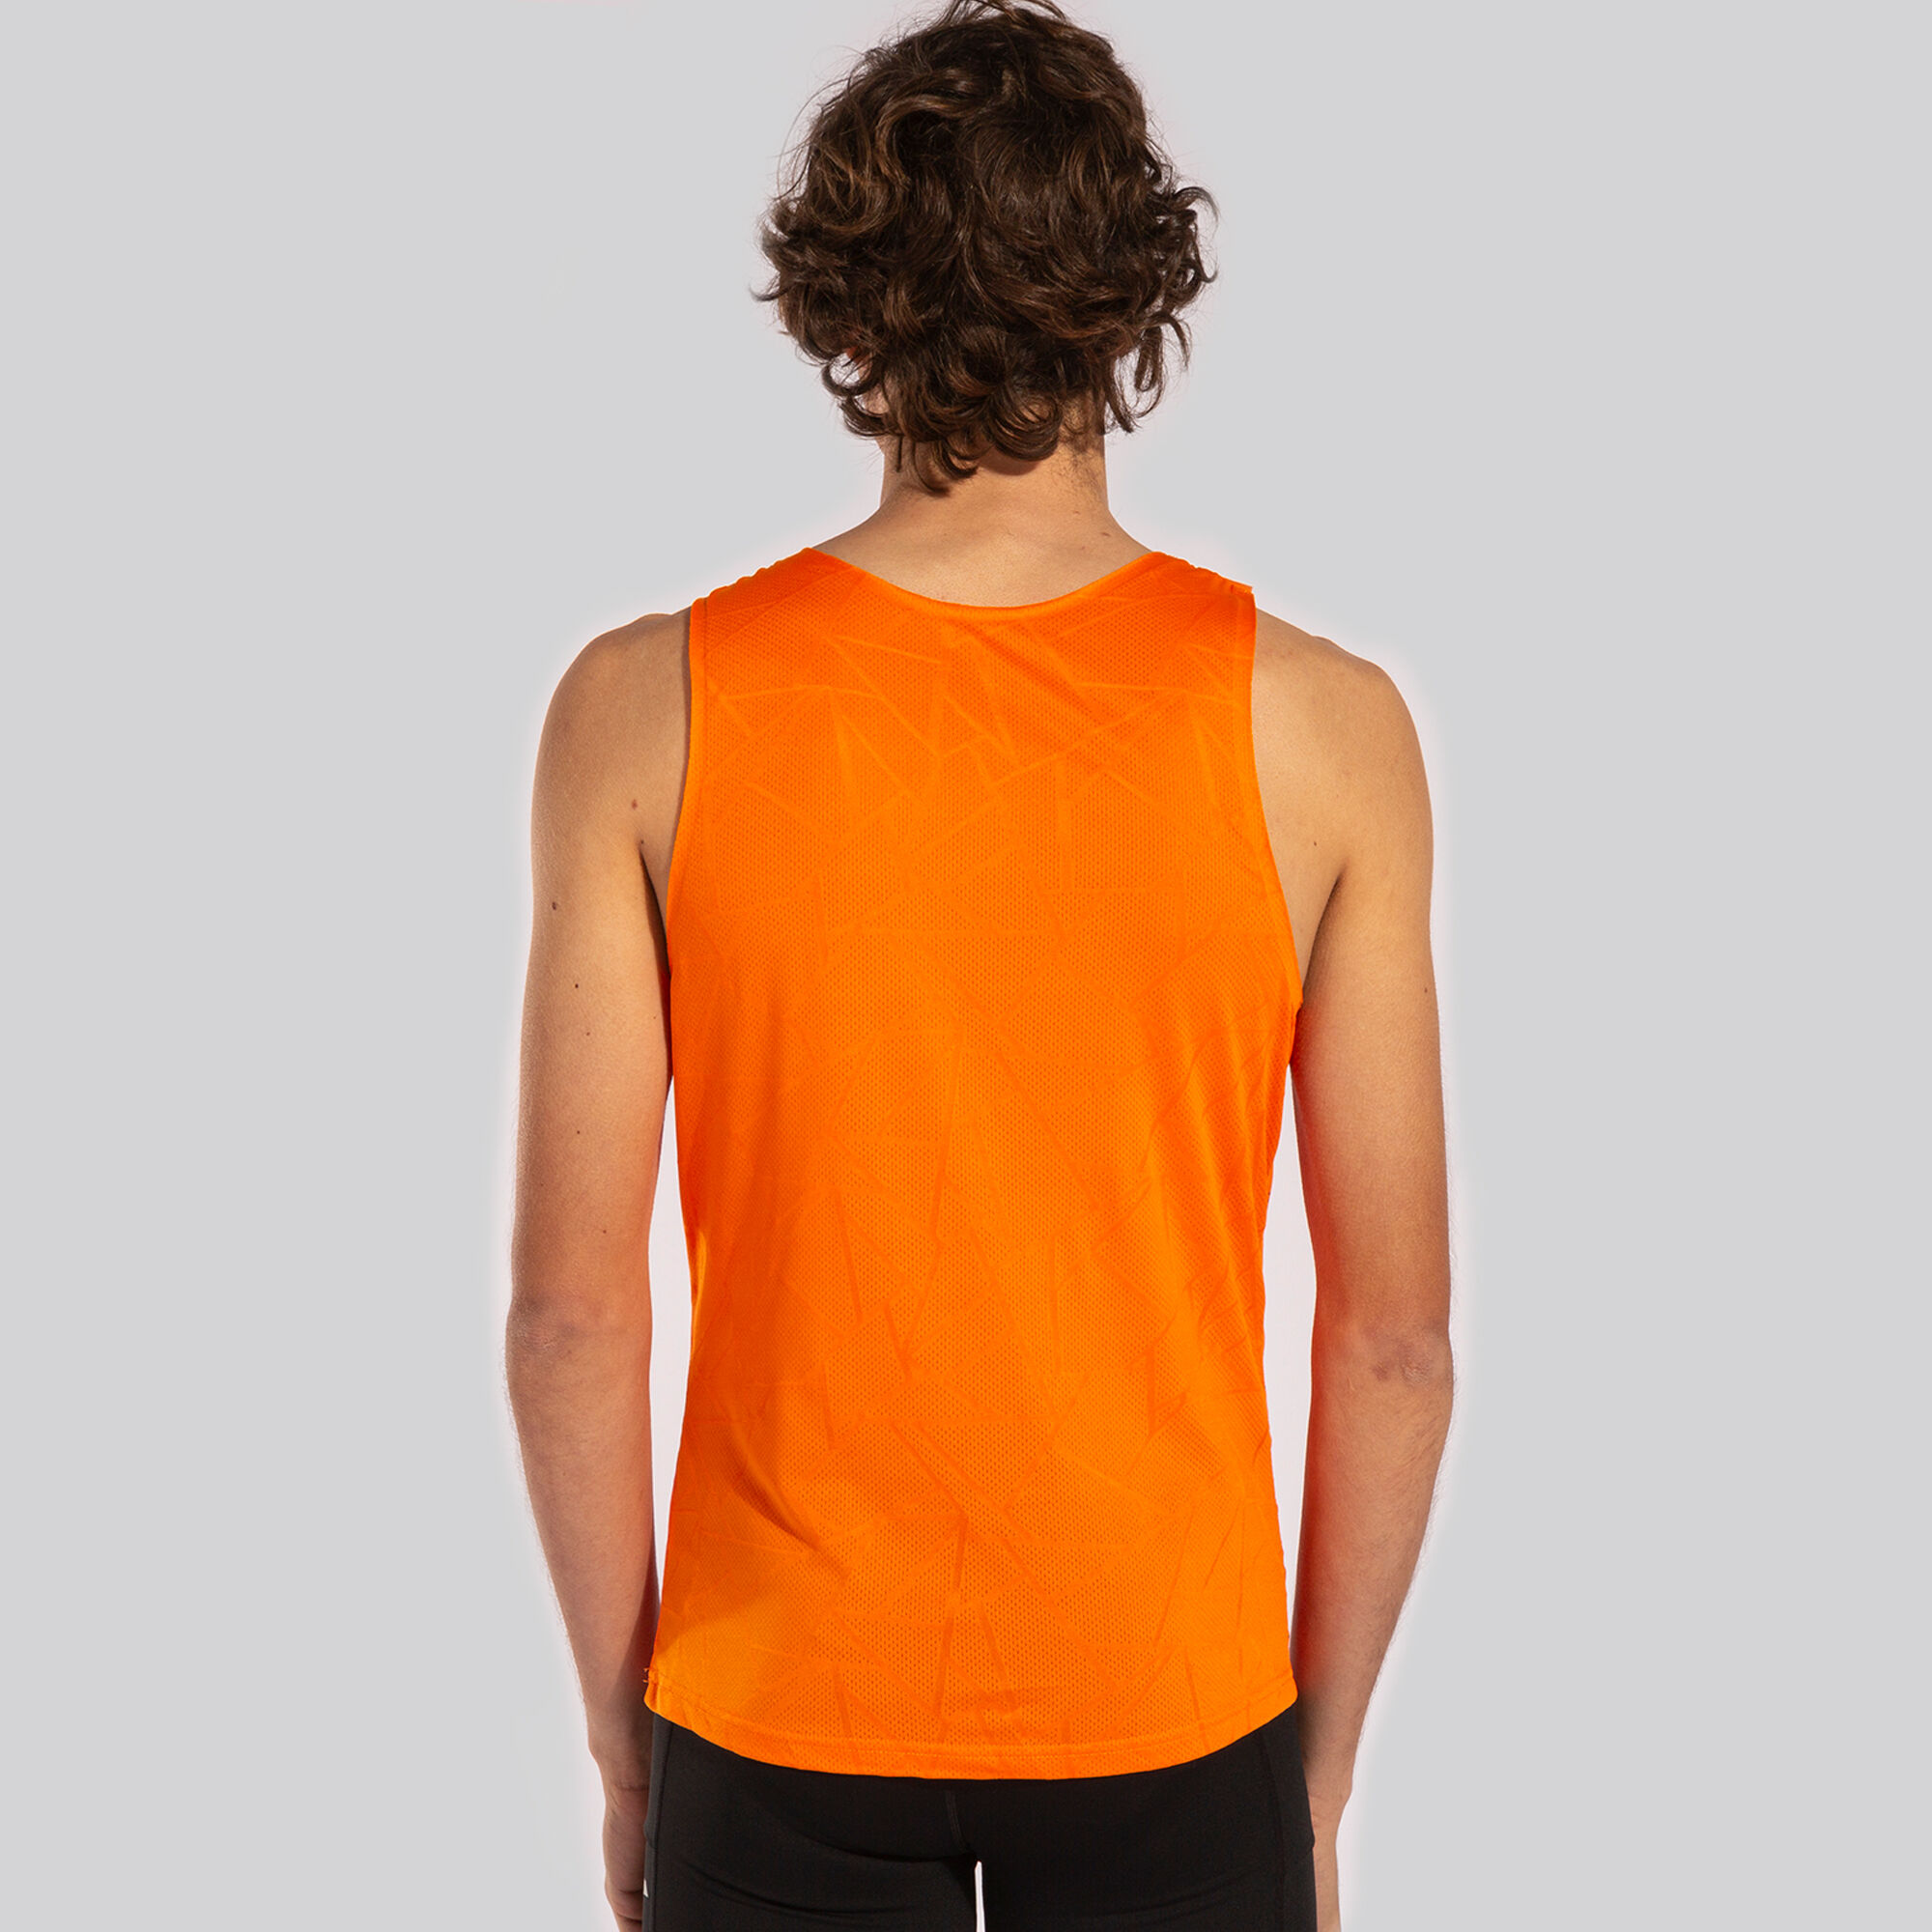 Camiseta tirantes hombre Elite IX naranja